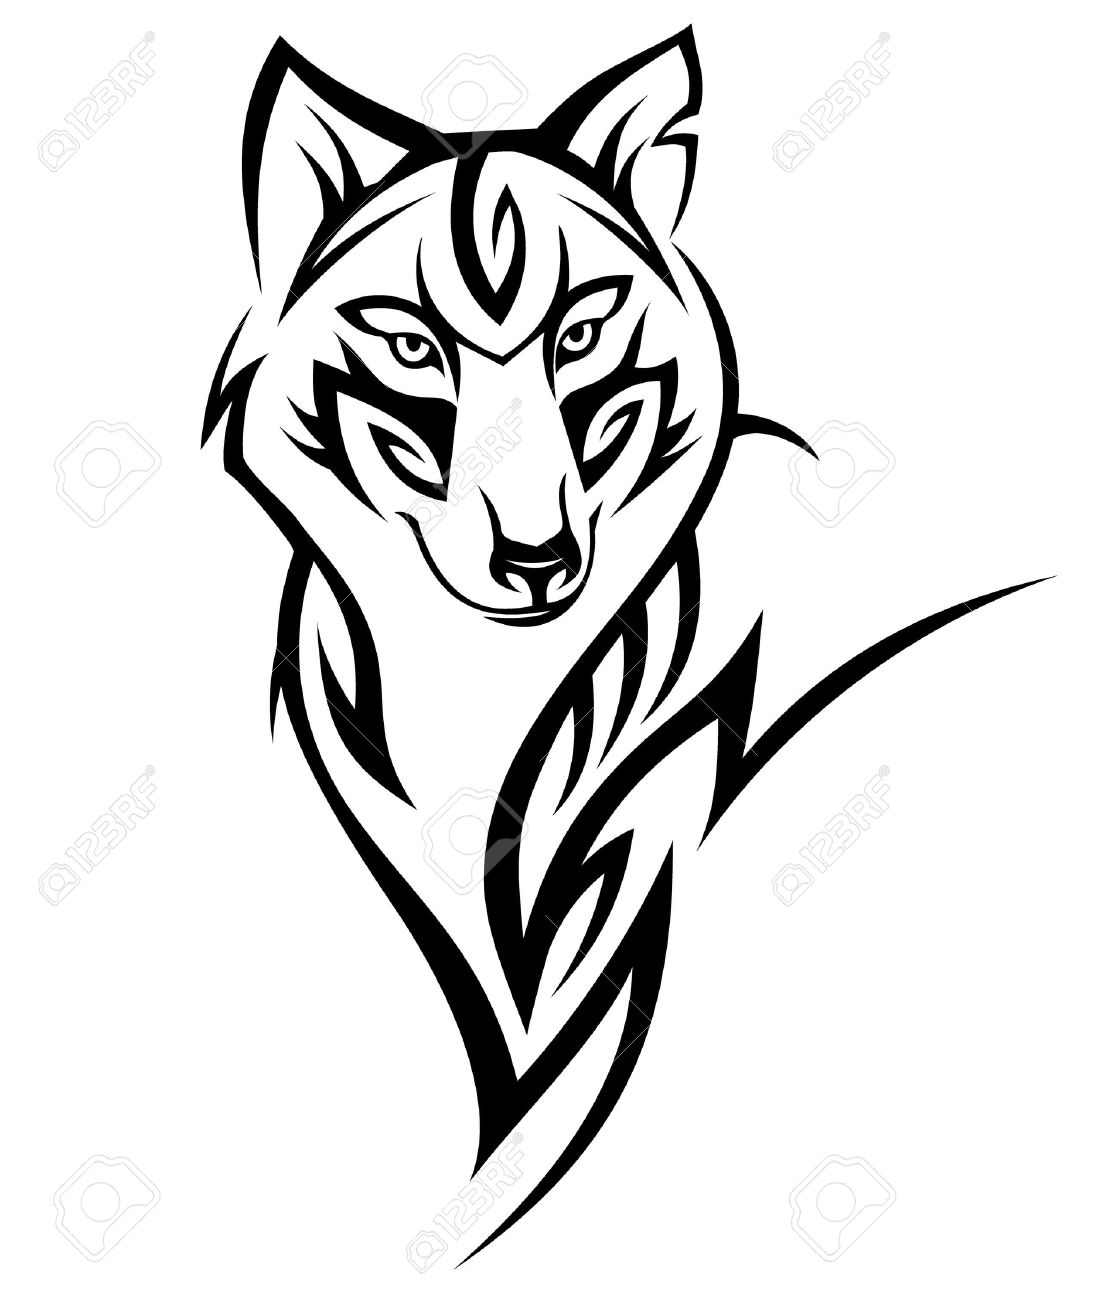 Very Nice Wolf Tribal Tattoo Design